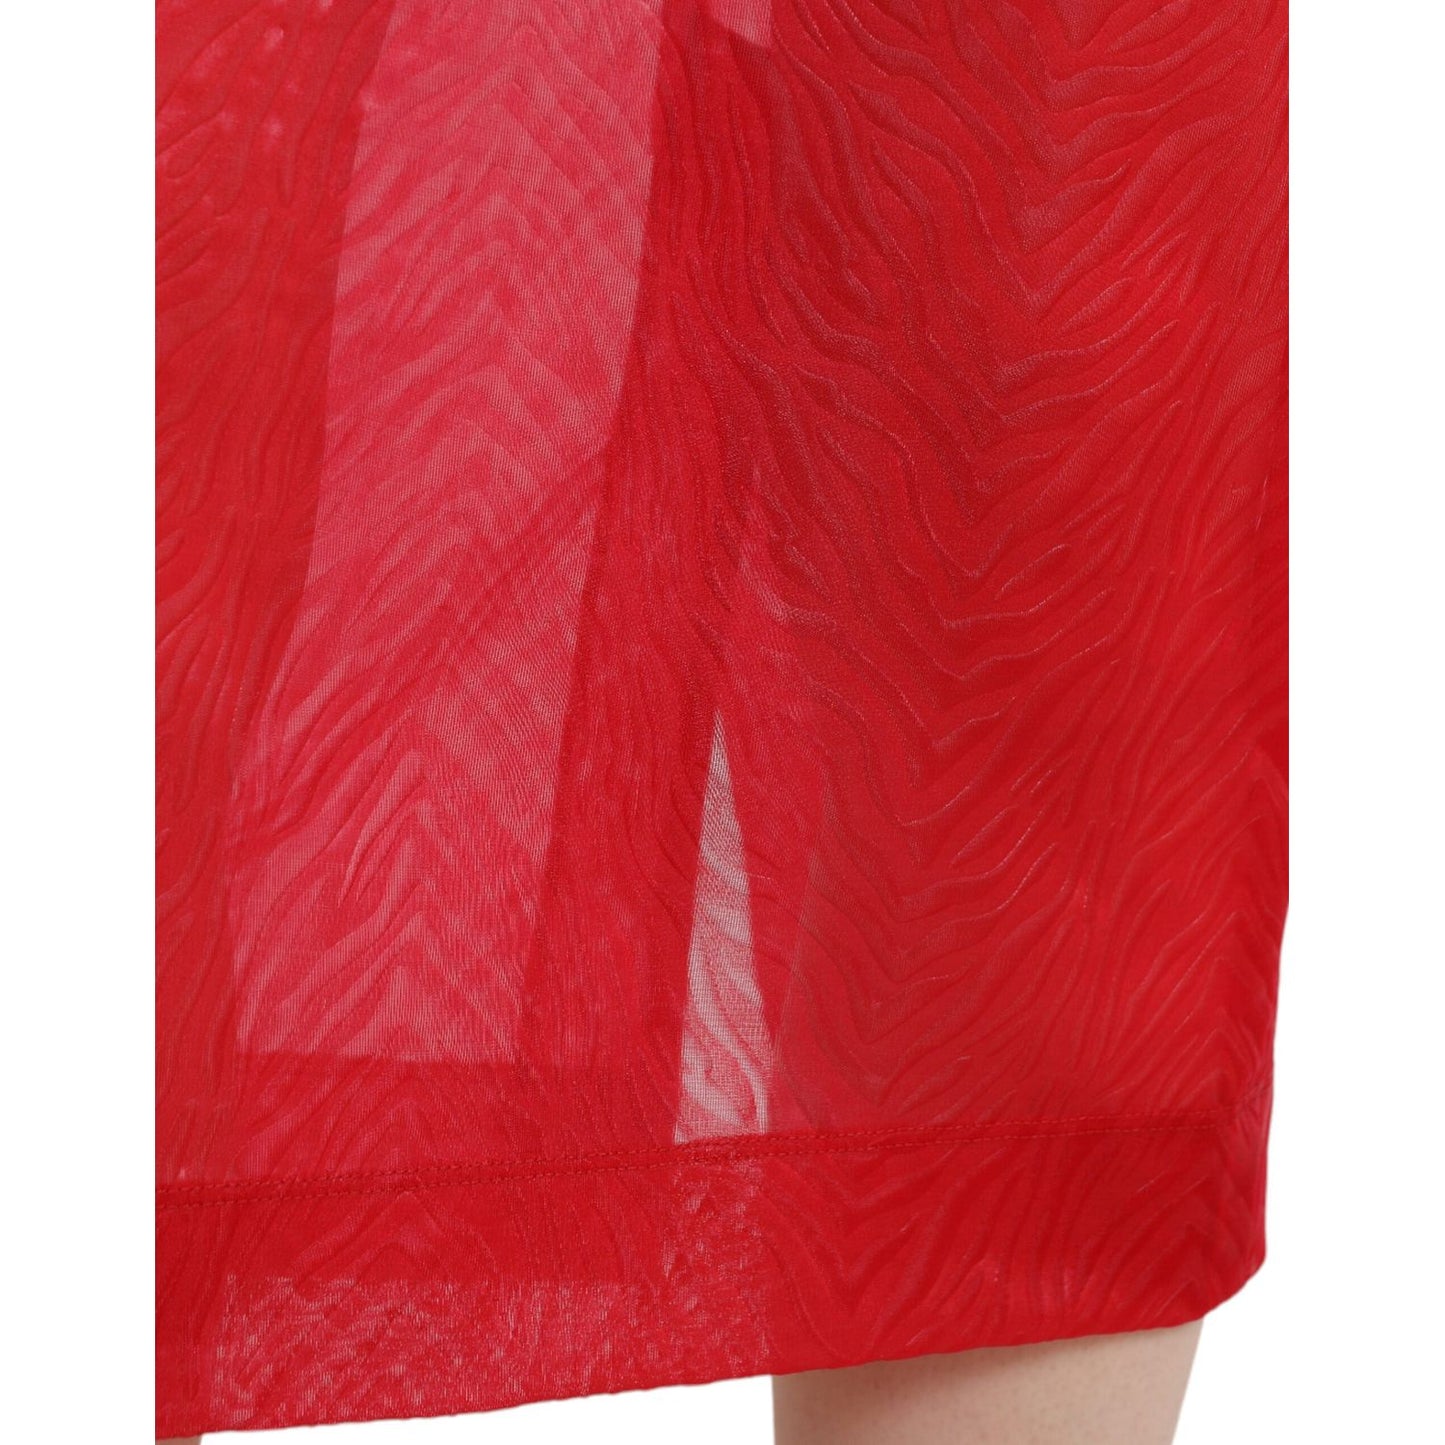 Dolce & Gabbana Chic Red High Waist Sheer Midi Skirt red-sheer-high-waist-pencil-cut-midi-skirt 465A1824-bg-scaled-52024d16-f31.jpg